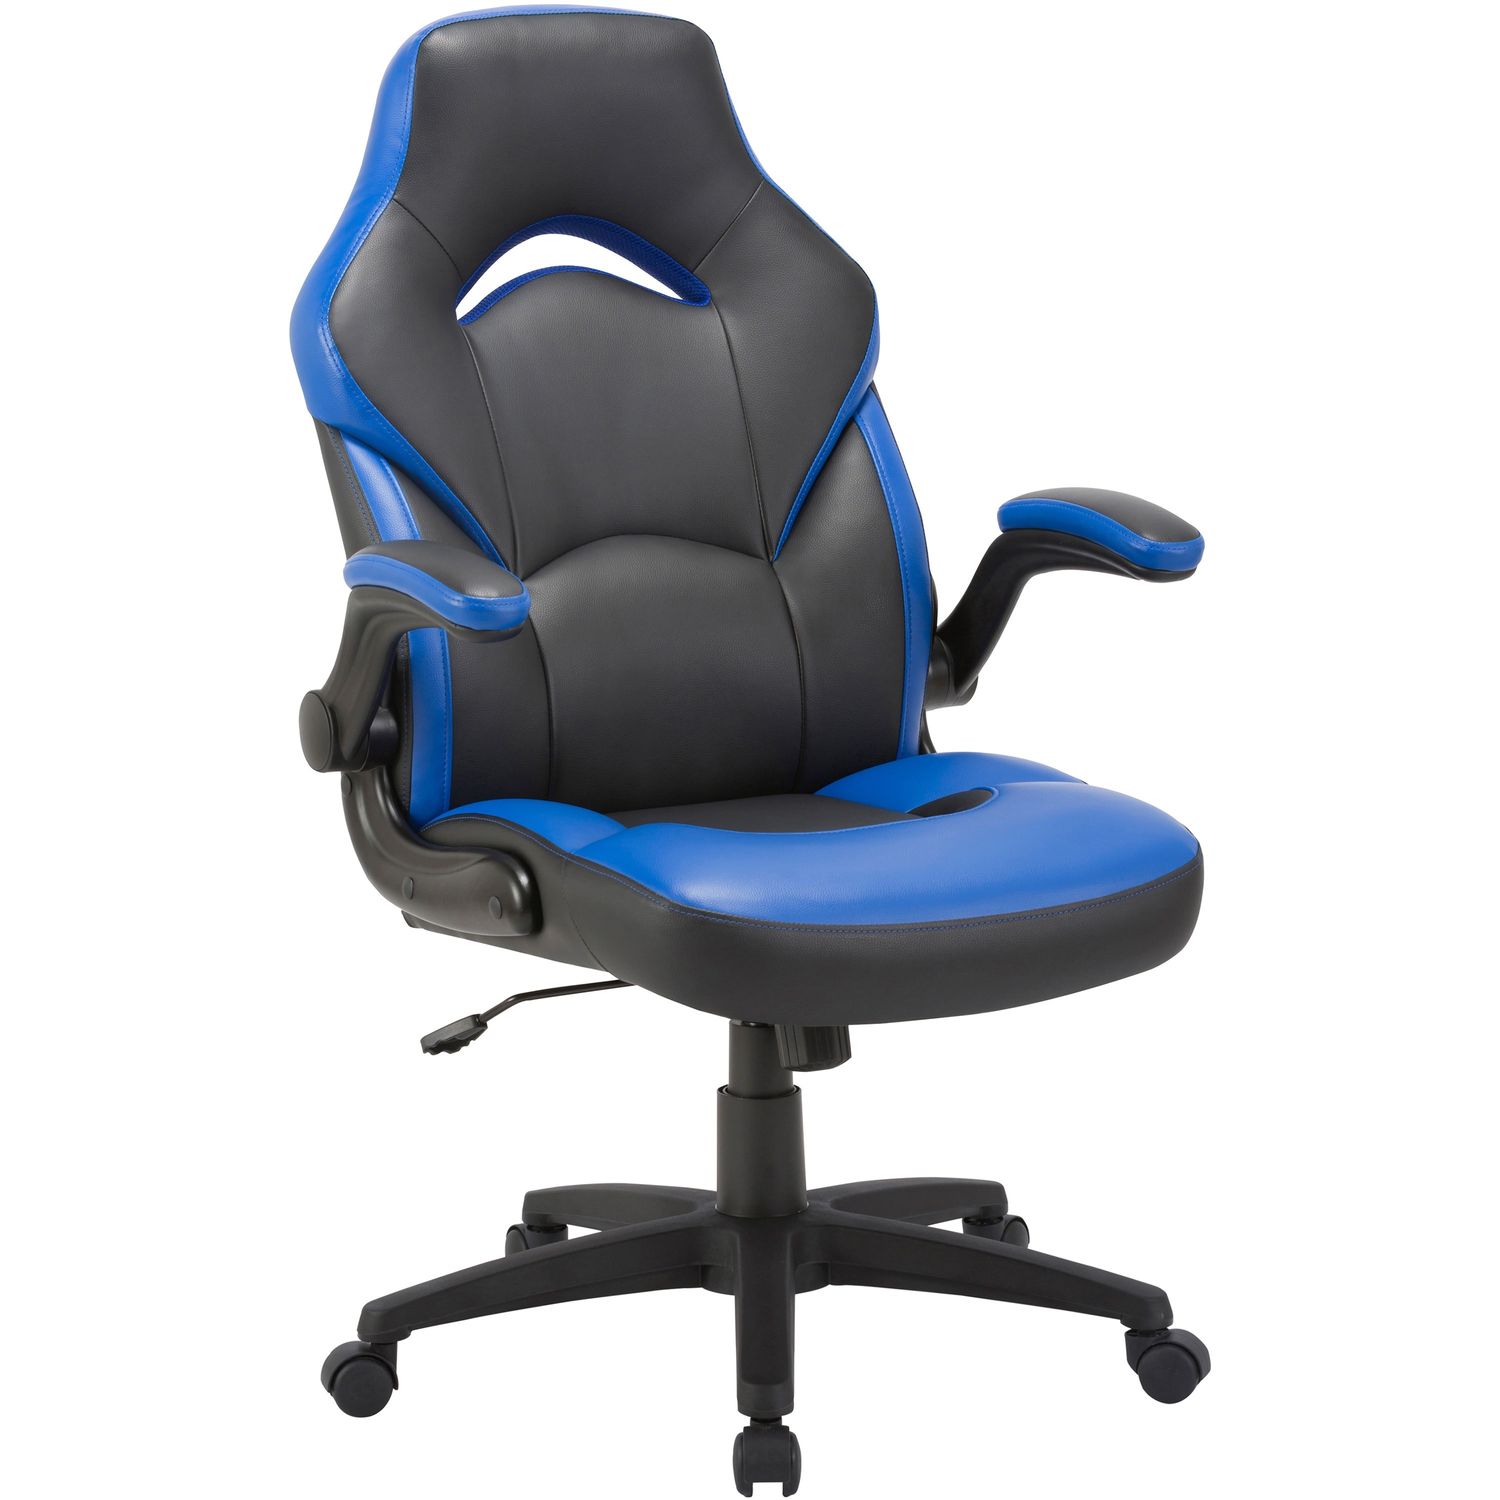 Bucket Seat High-back Gaming Chair Black, Blue Seat, Black, Blue Back, 5-star Base, 28" Length x 20.5" Width x 47.5" Height